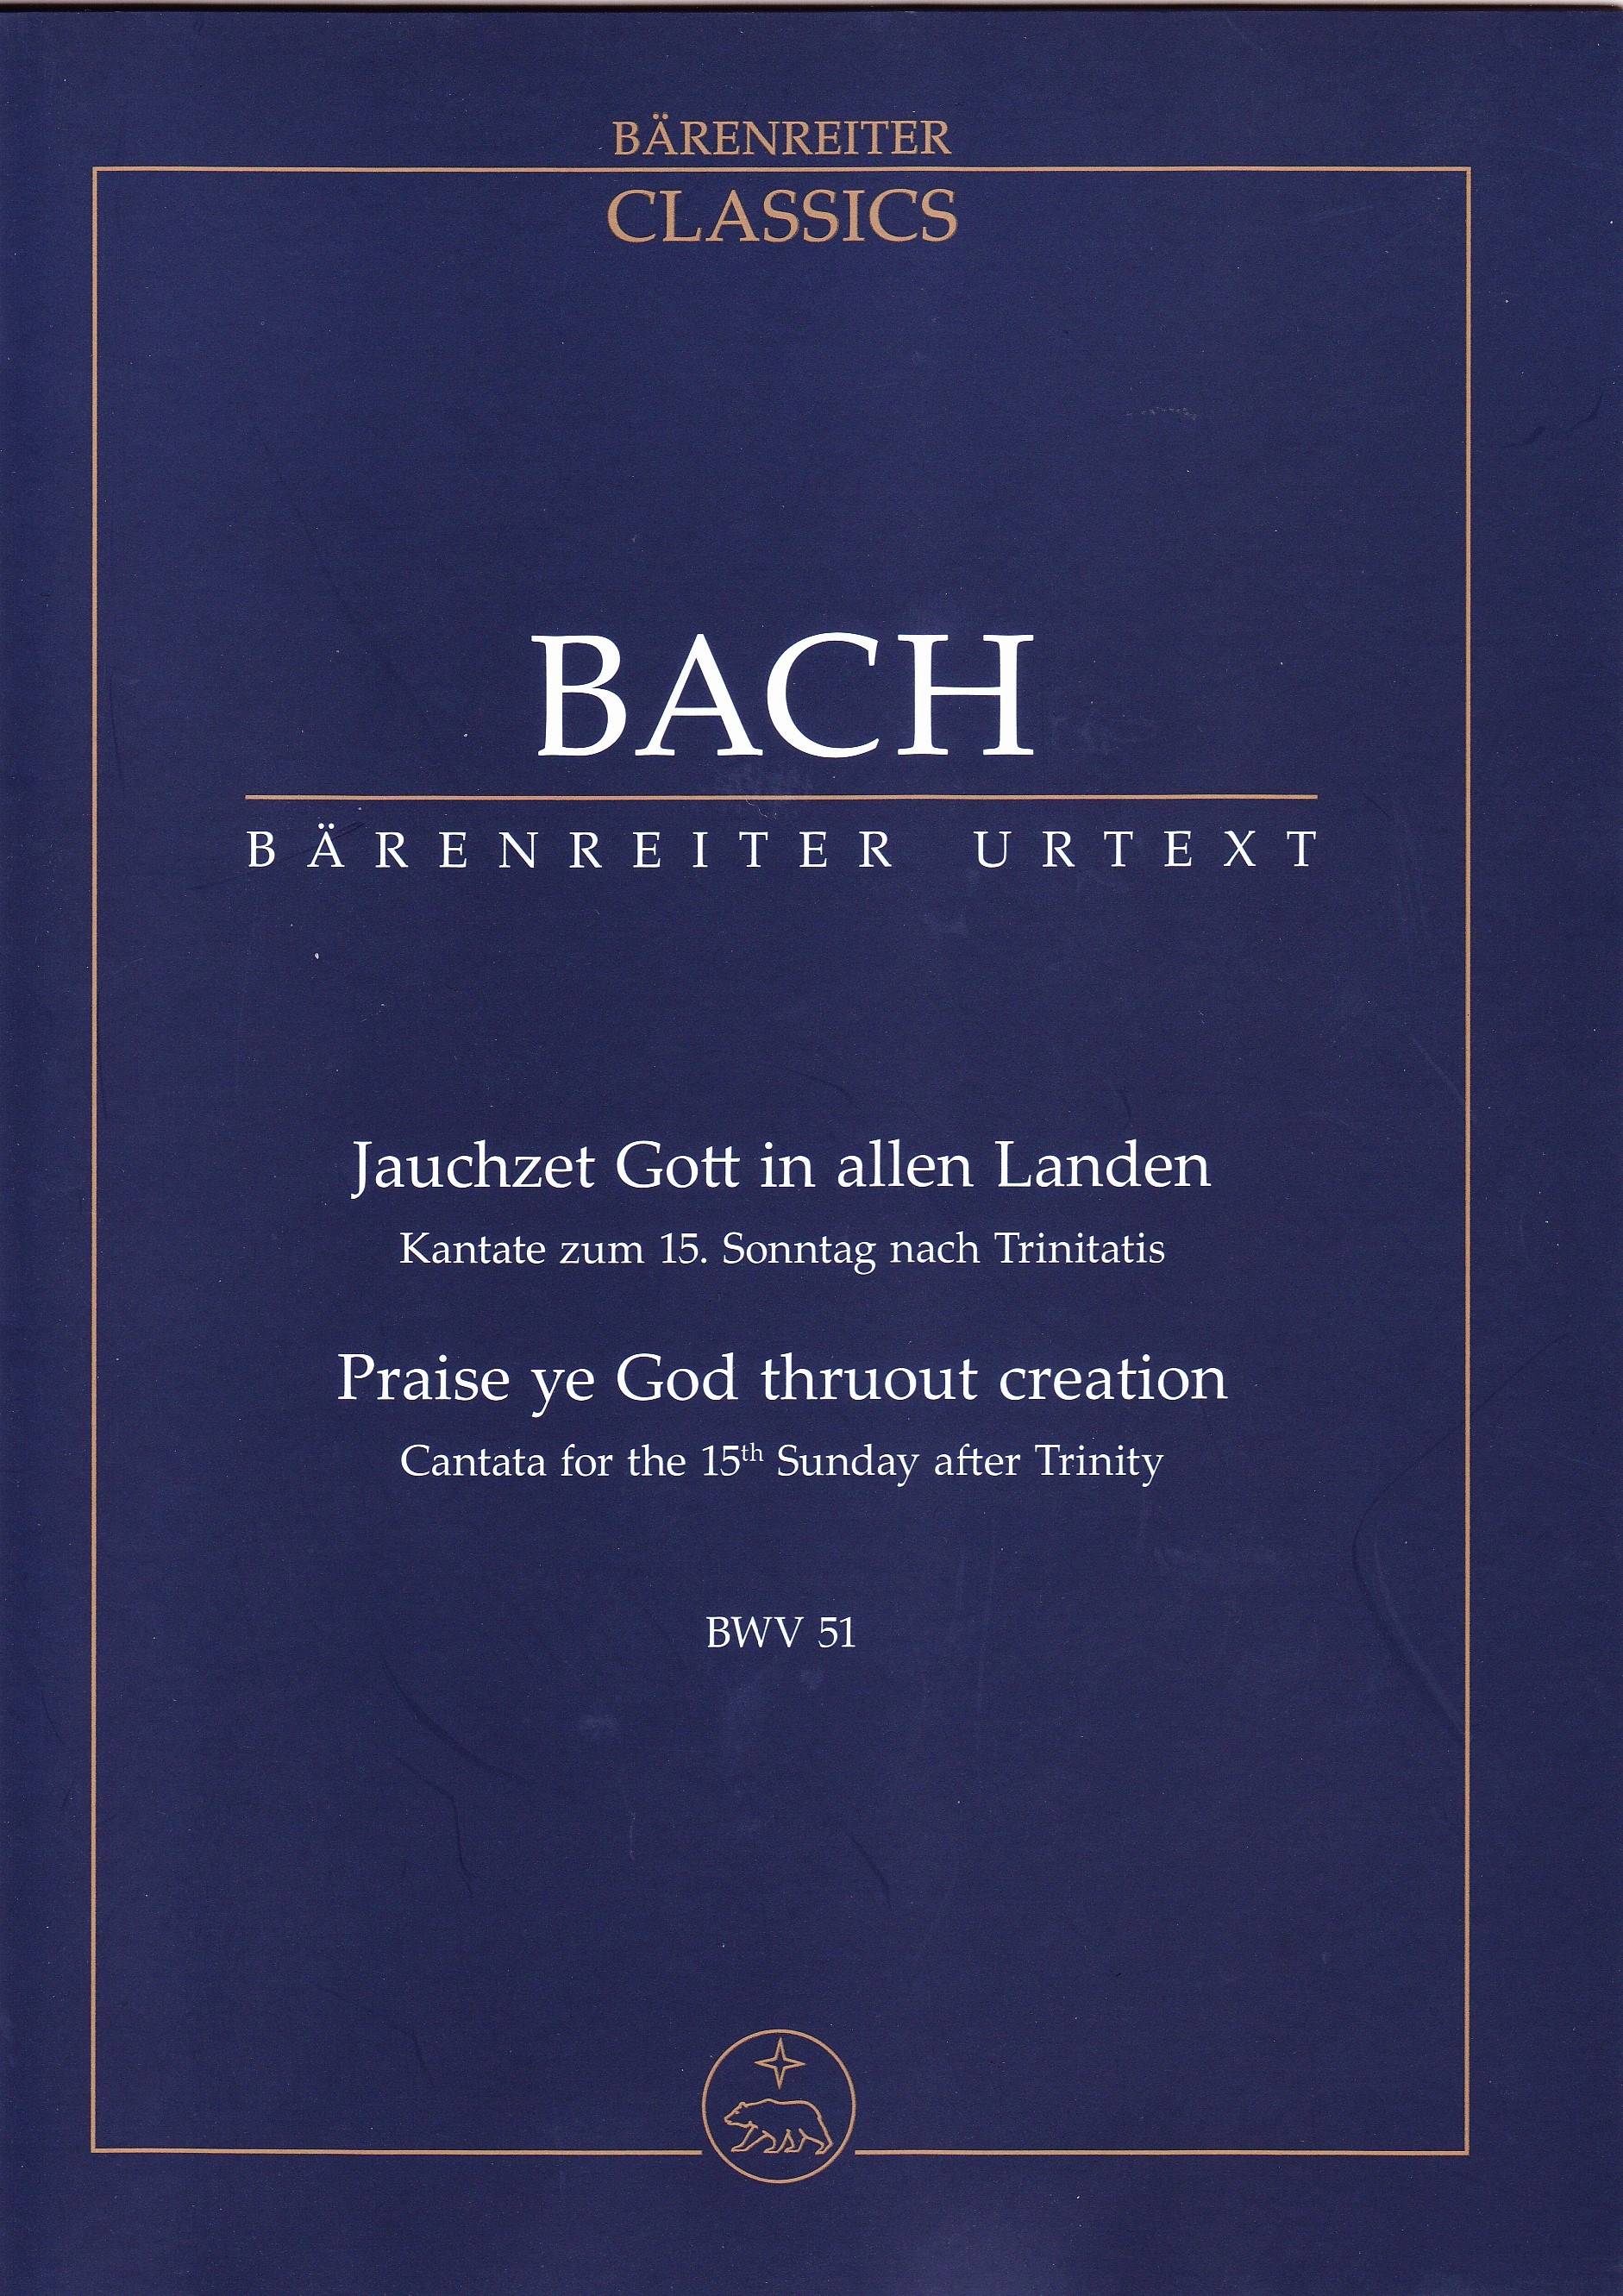 Bach - Praise ye God thruout creation BWV 51 [Pocket Score]